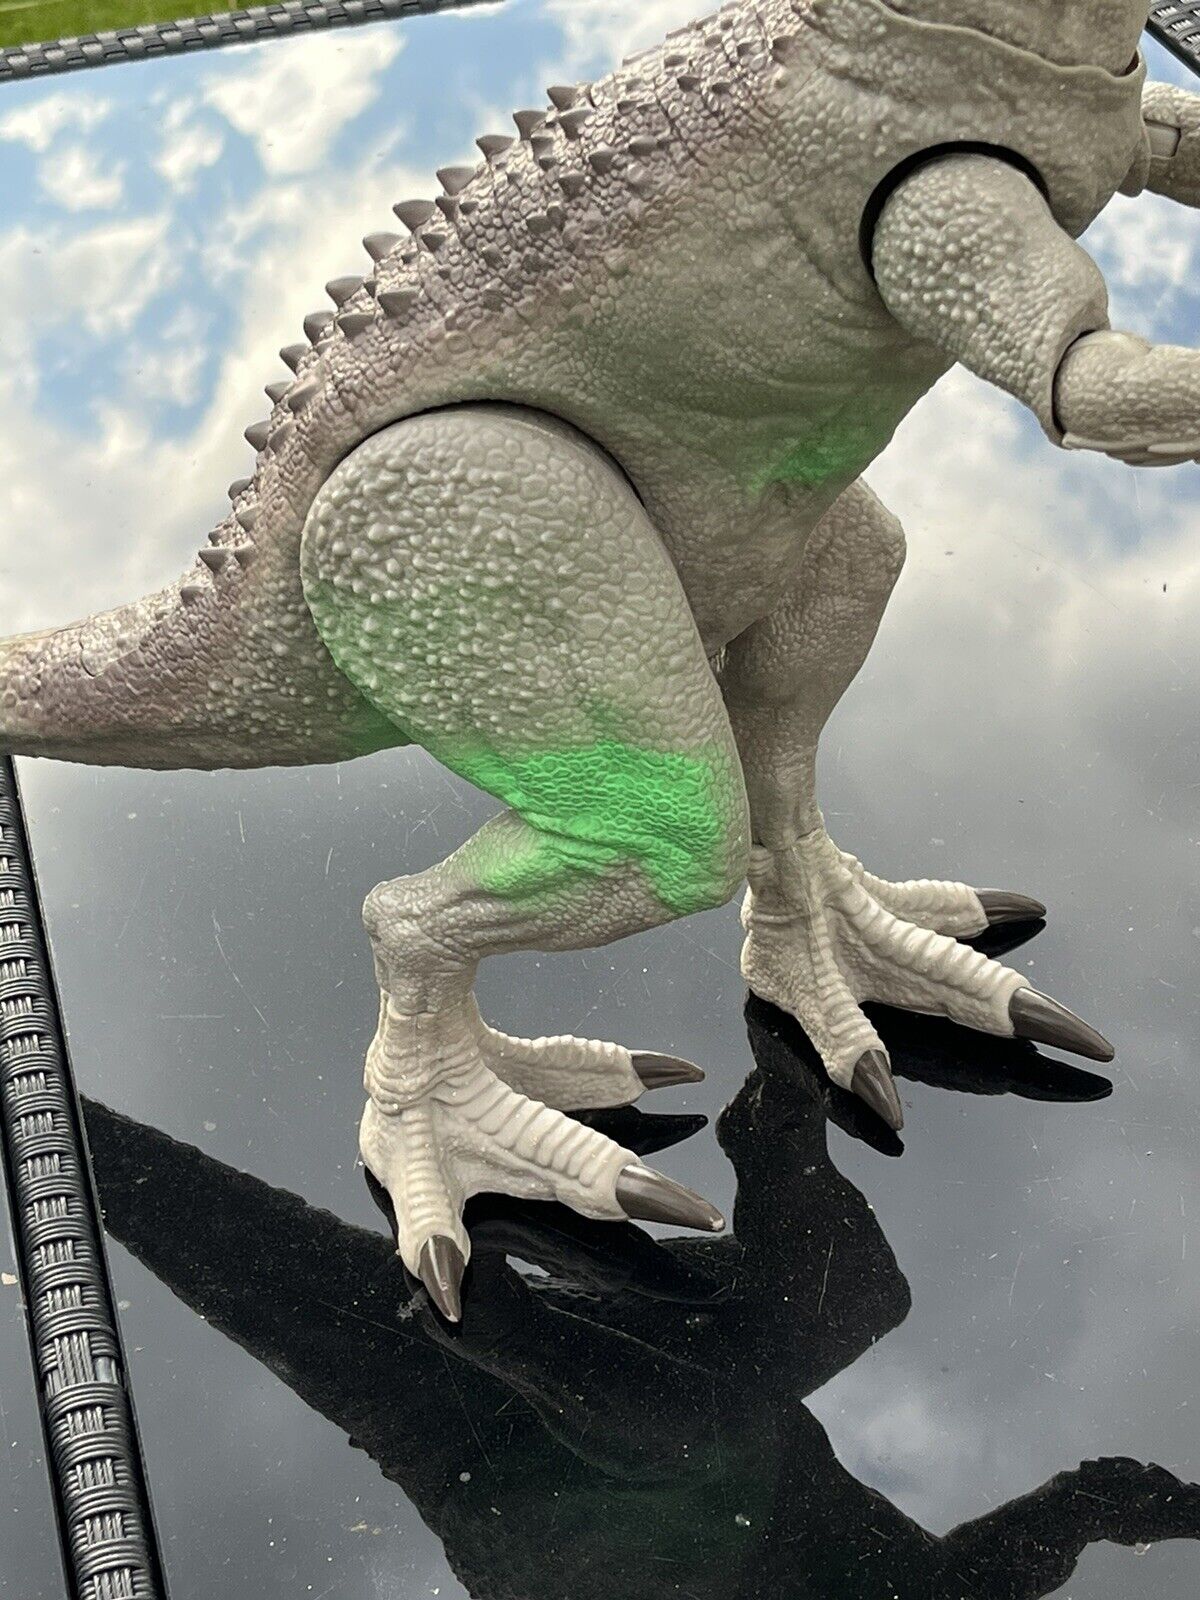 Jurassic World Dinosaur Collection